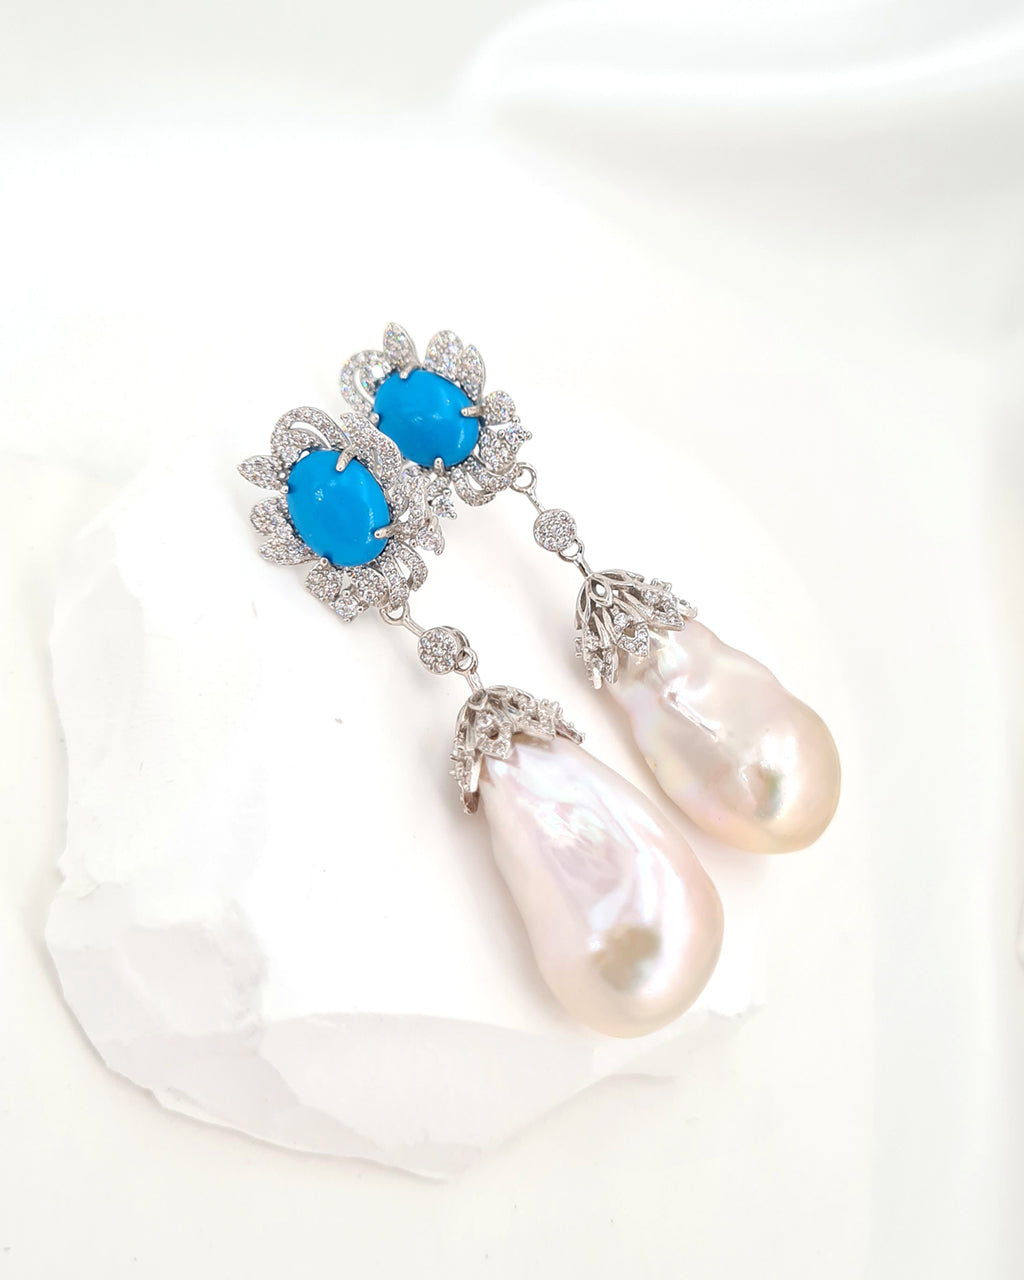 Baroque Pearl Earrings - Blue Stone Floral Pearl Statement Earrings | Wedding Something Blue Earrings